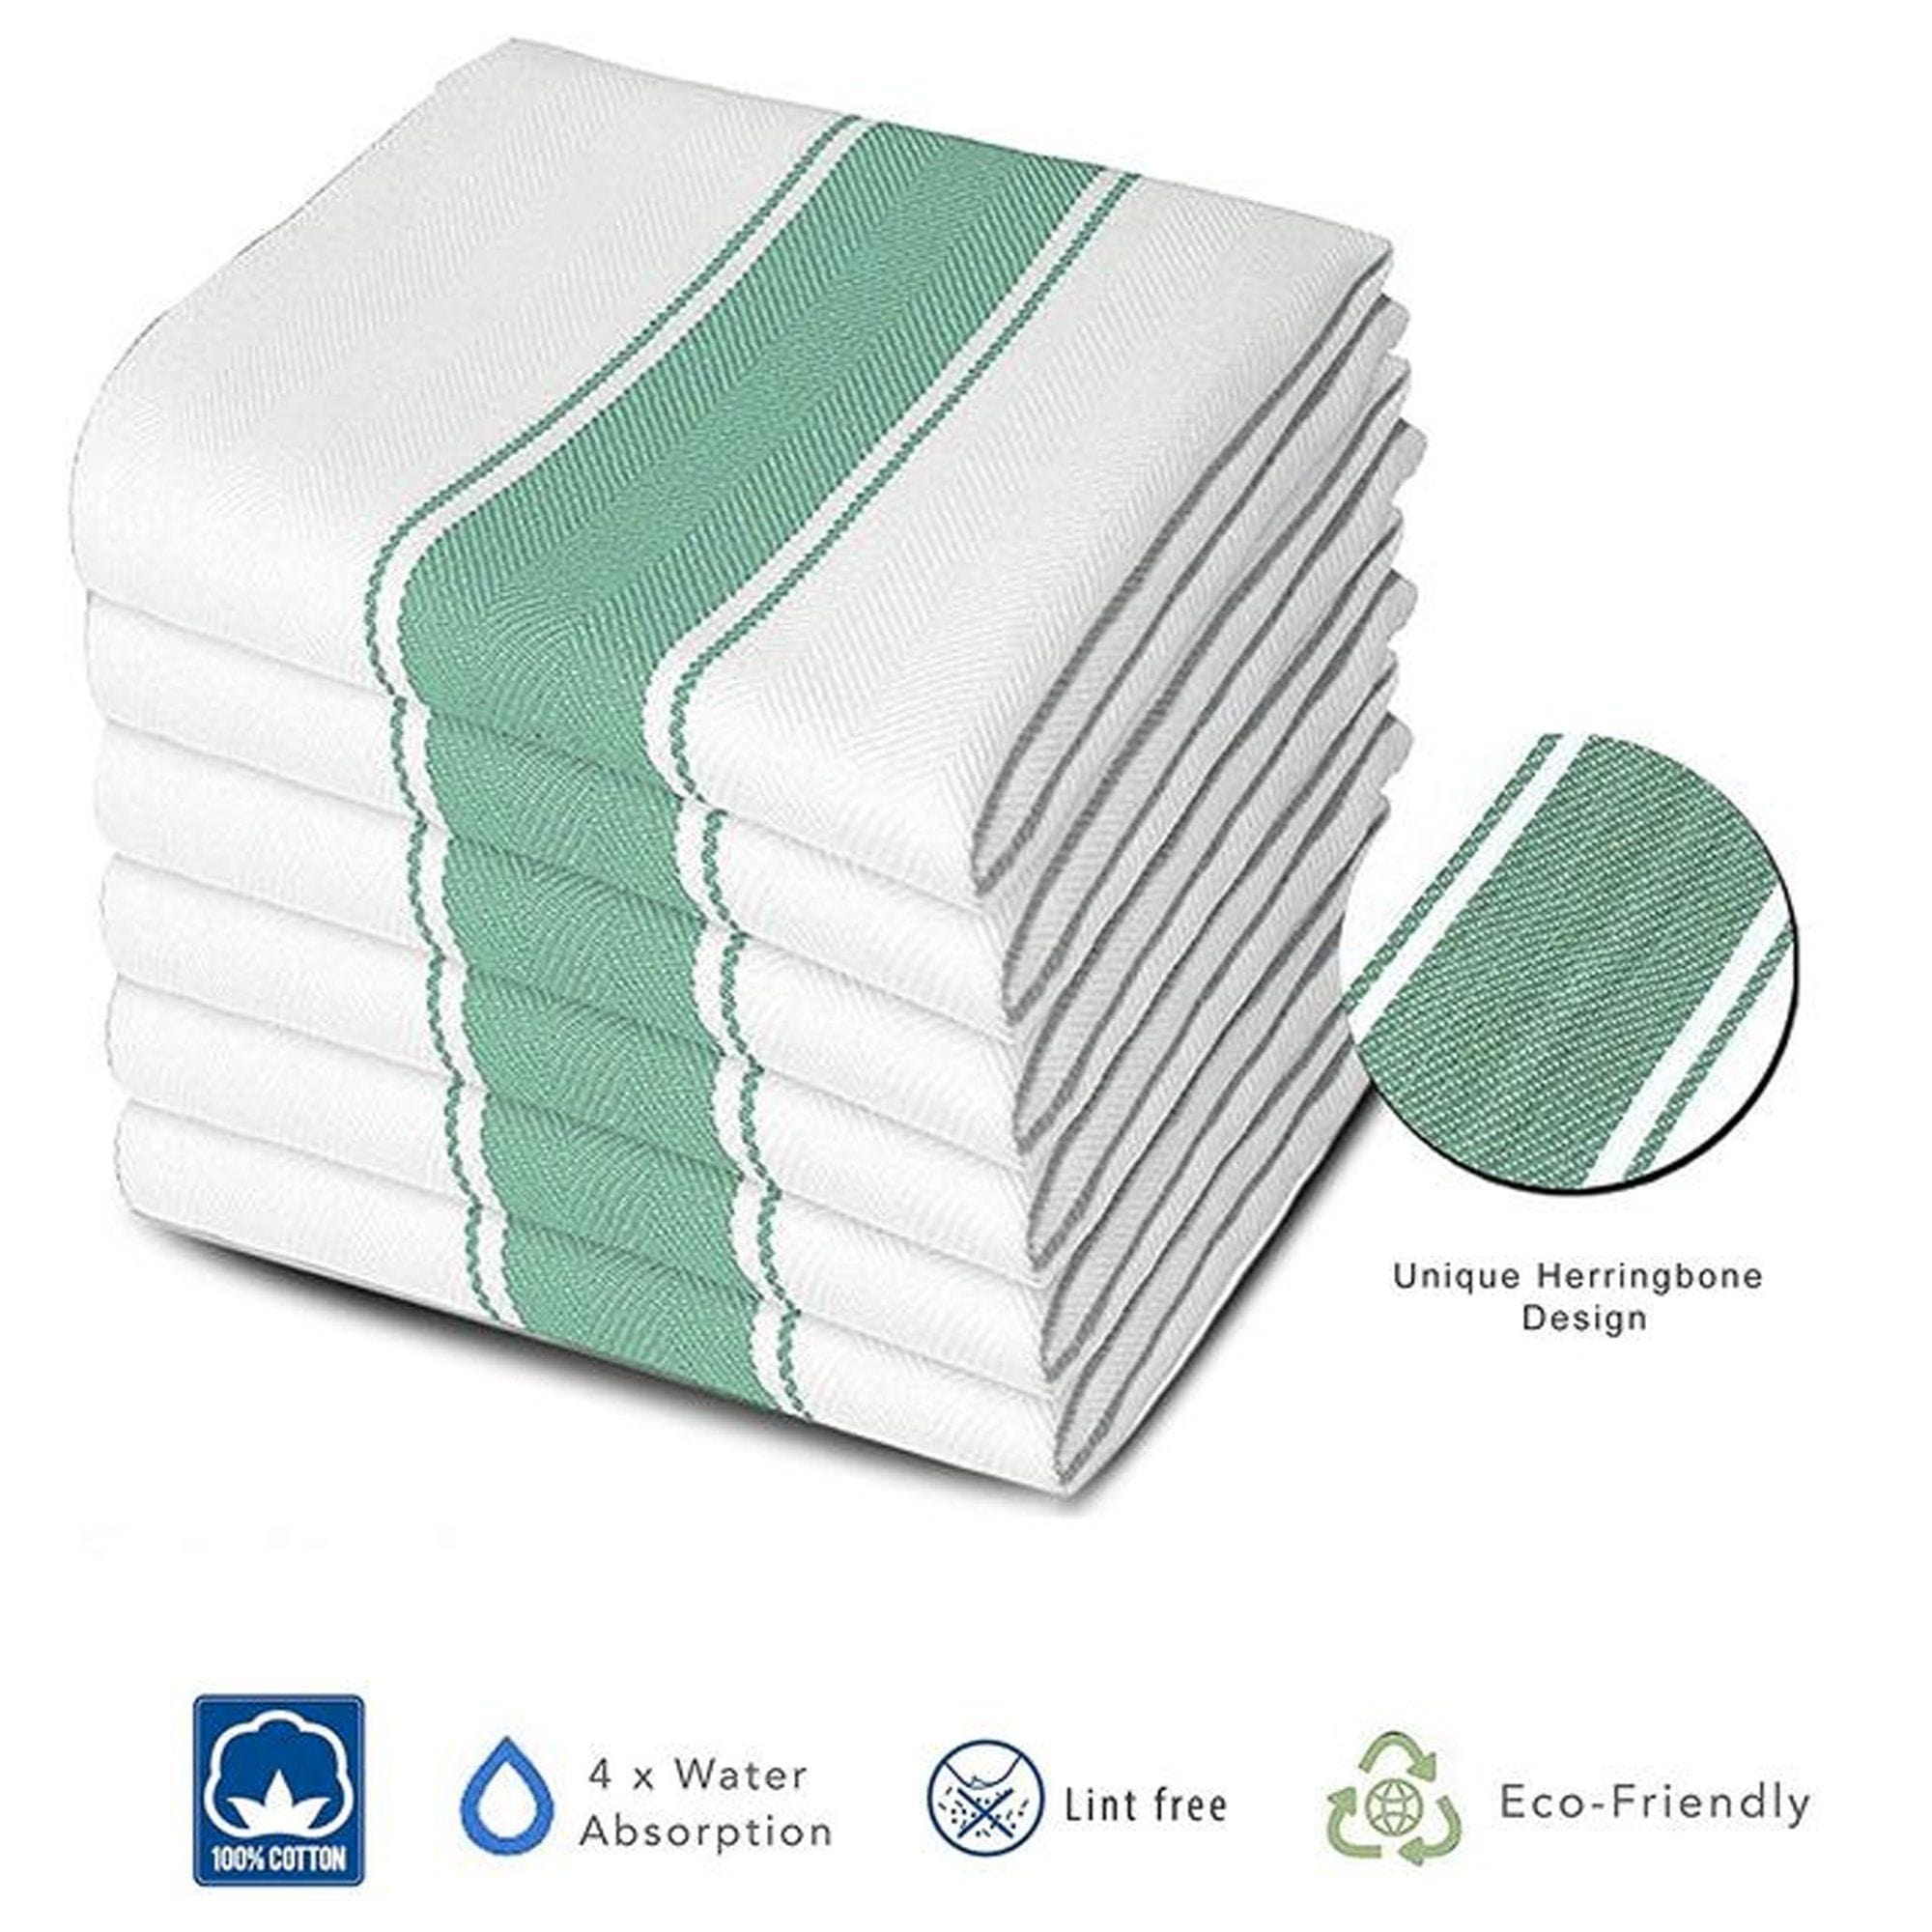 100% Cotton Terry Jumbo Multi Tea Towel Kitchen Dish Check Extra Large 50 x  70cm